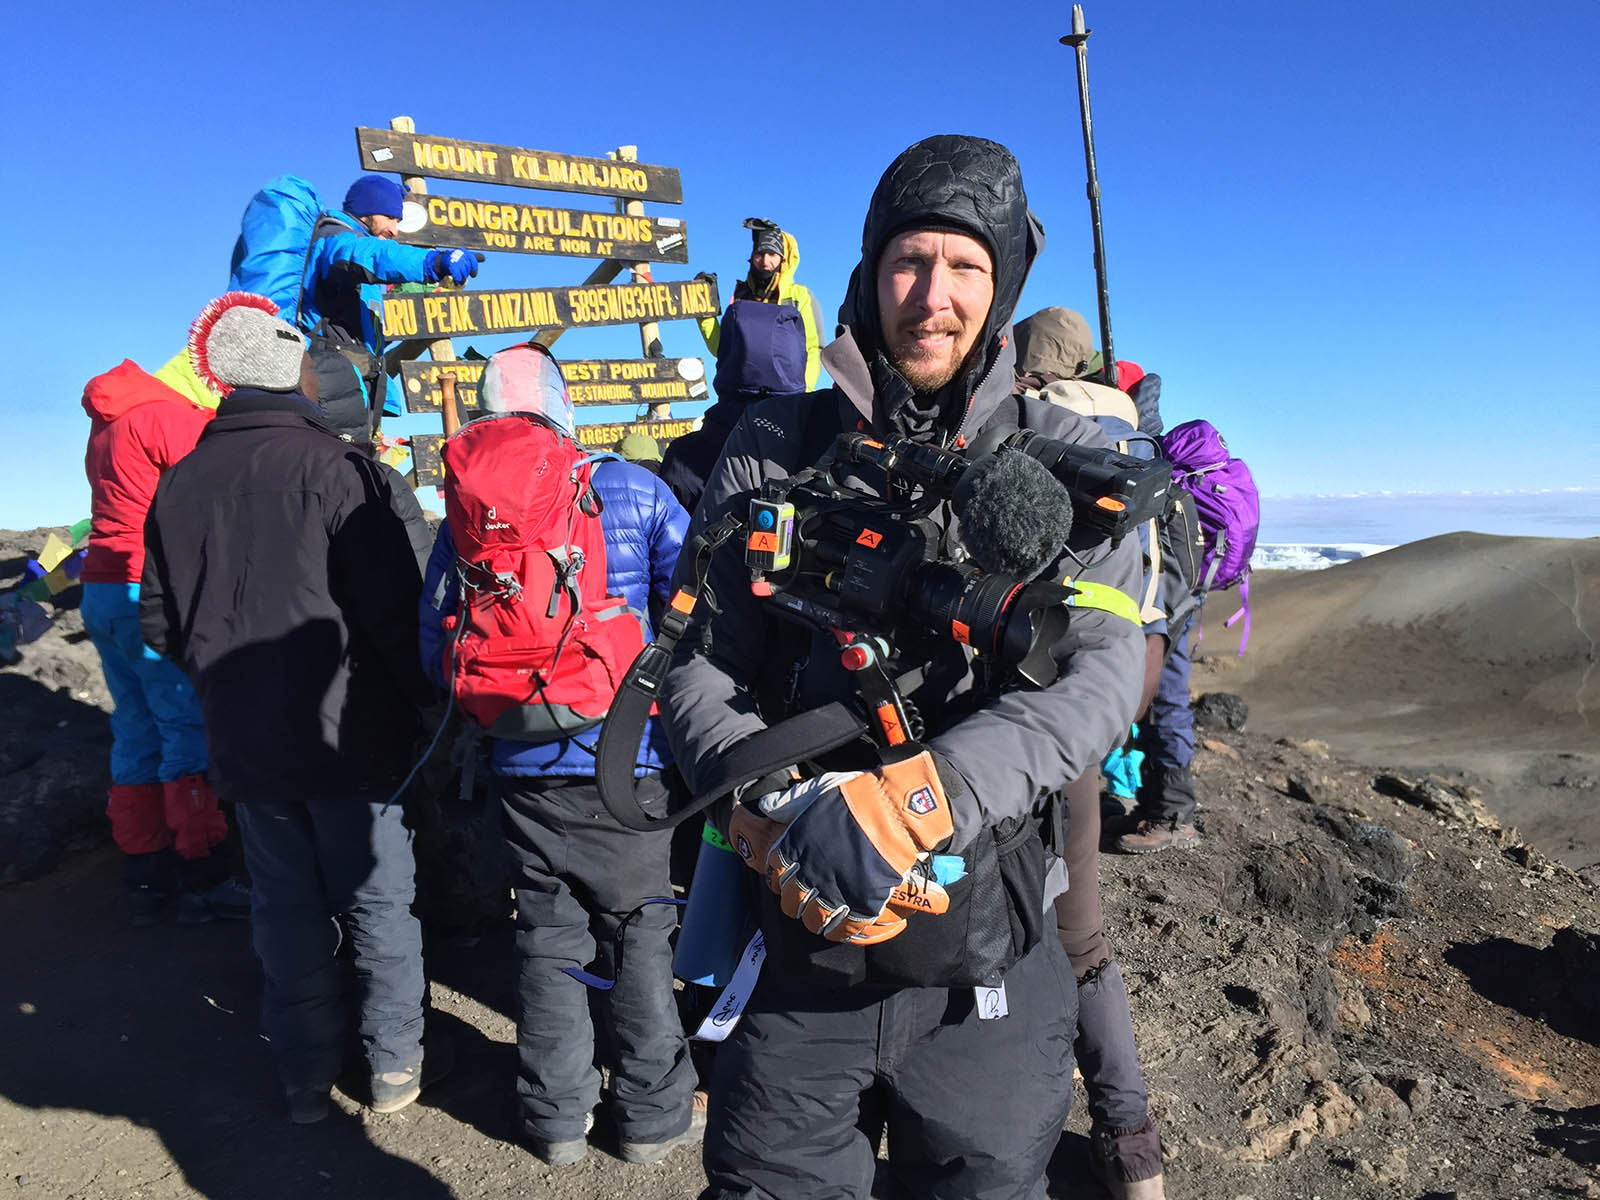 I made it! Kilimanjaro!!